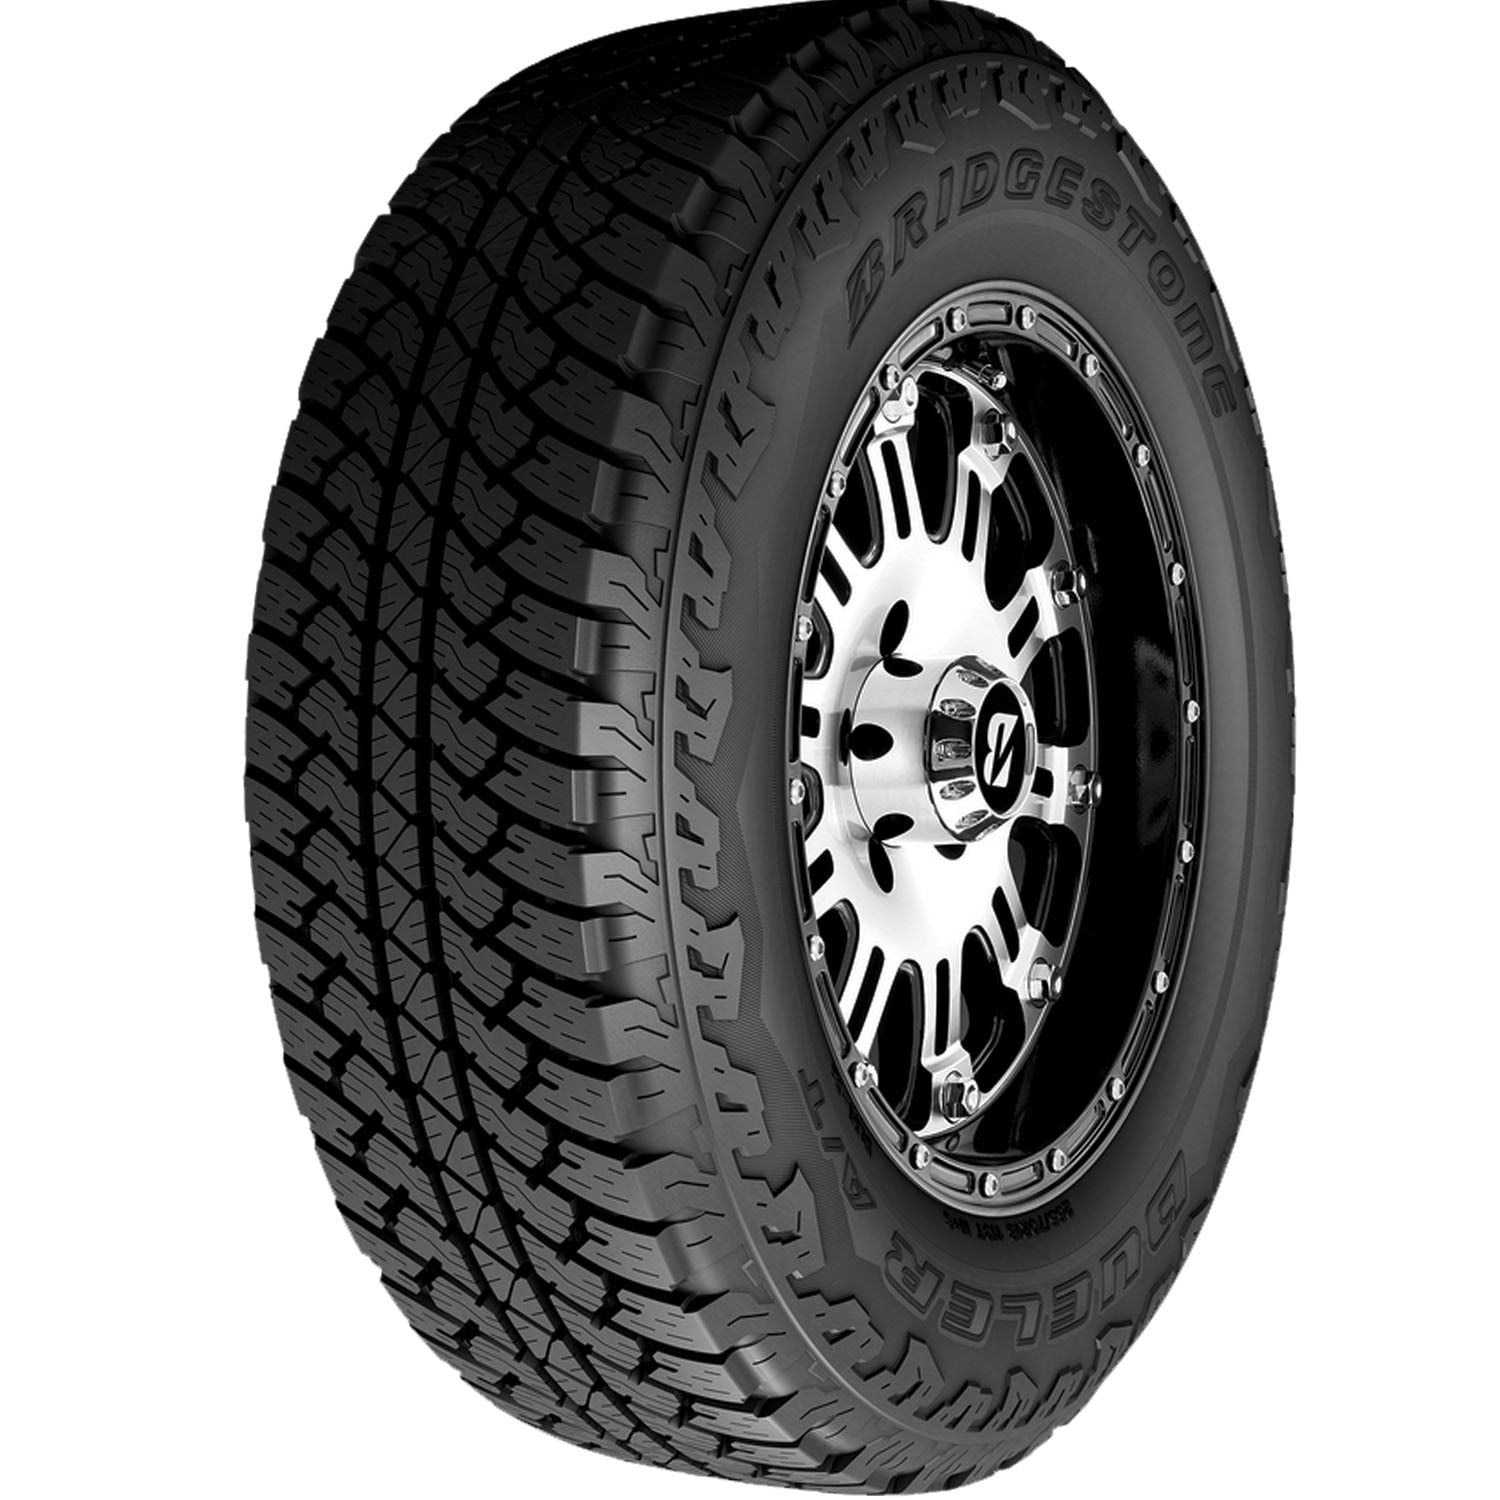 Bridgestone Dueler A/T RH-S All Terrain LT265/70R17 112/109Q C Light Truck  Tire